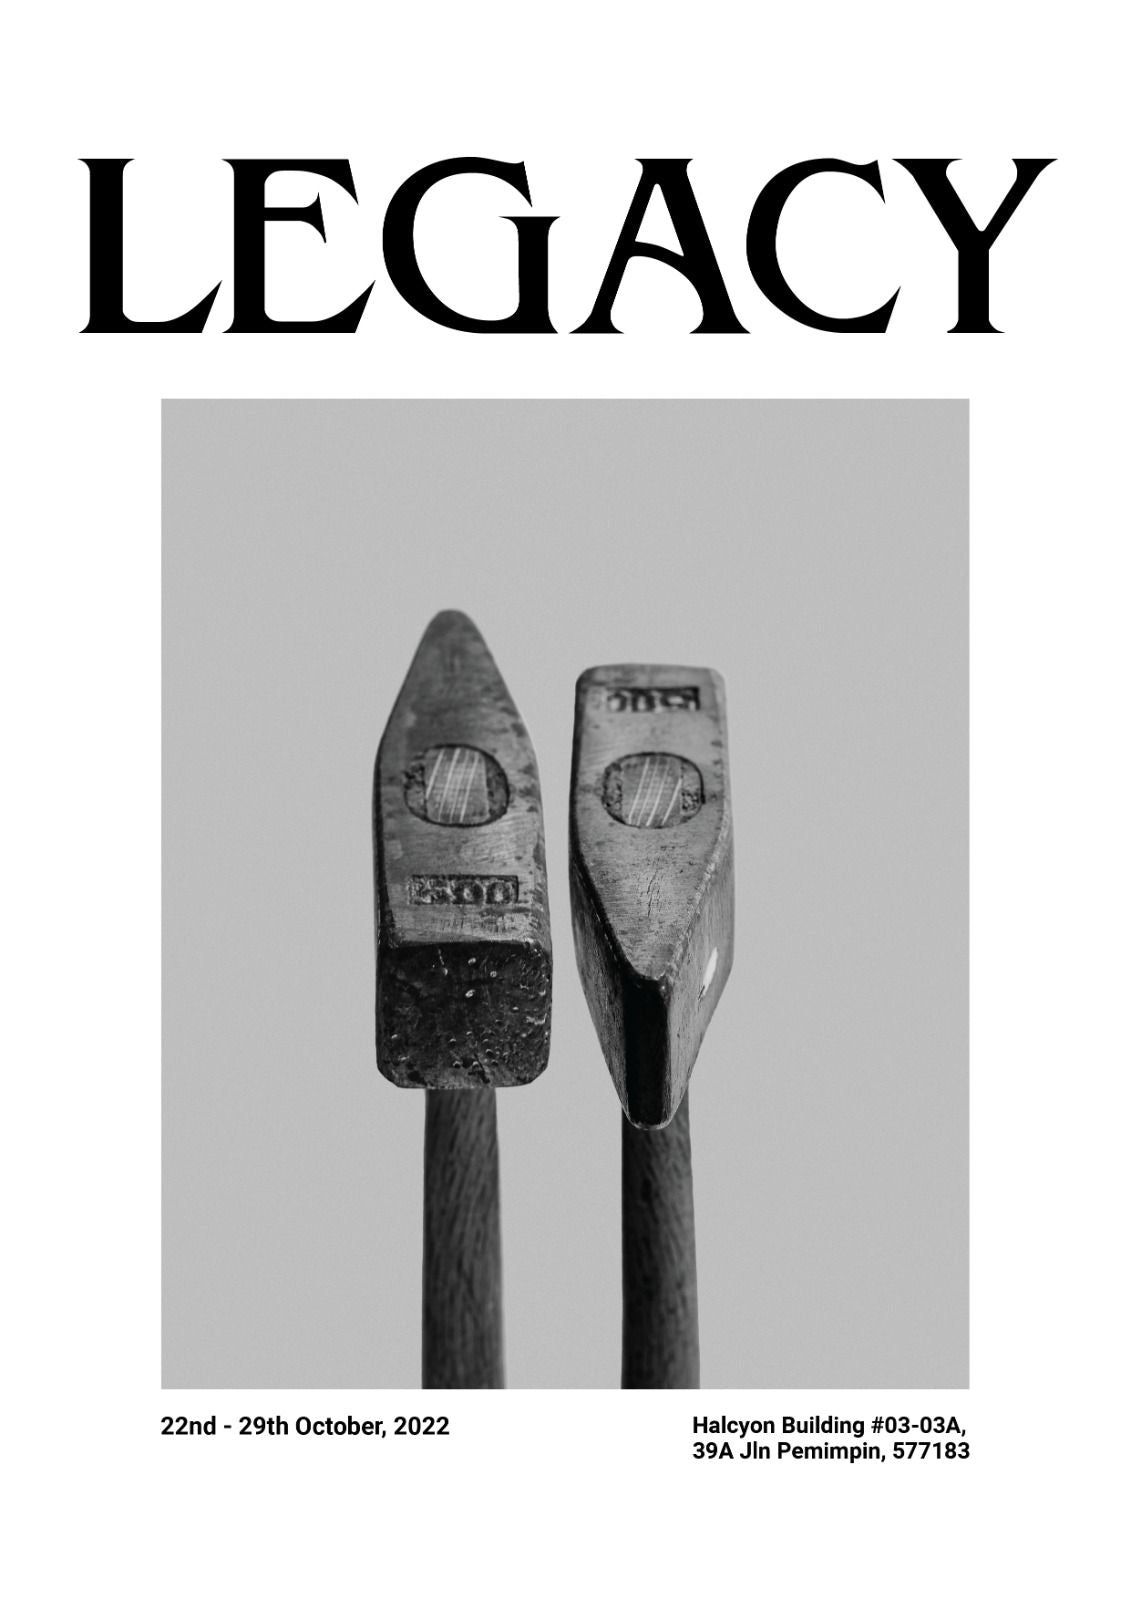 Legacy: A New Beginning